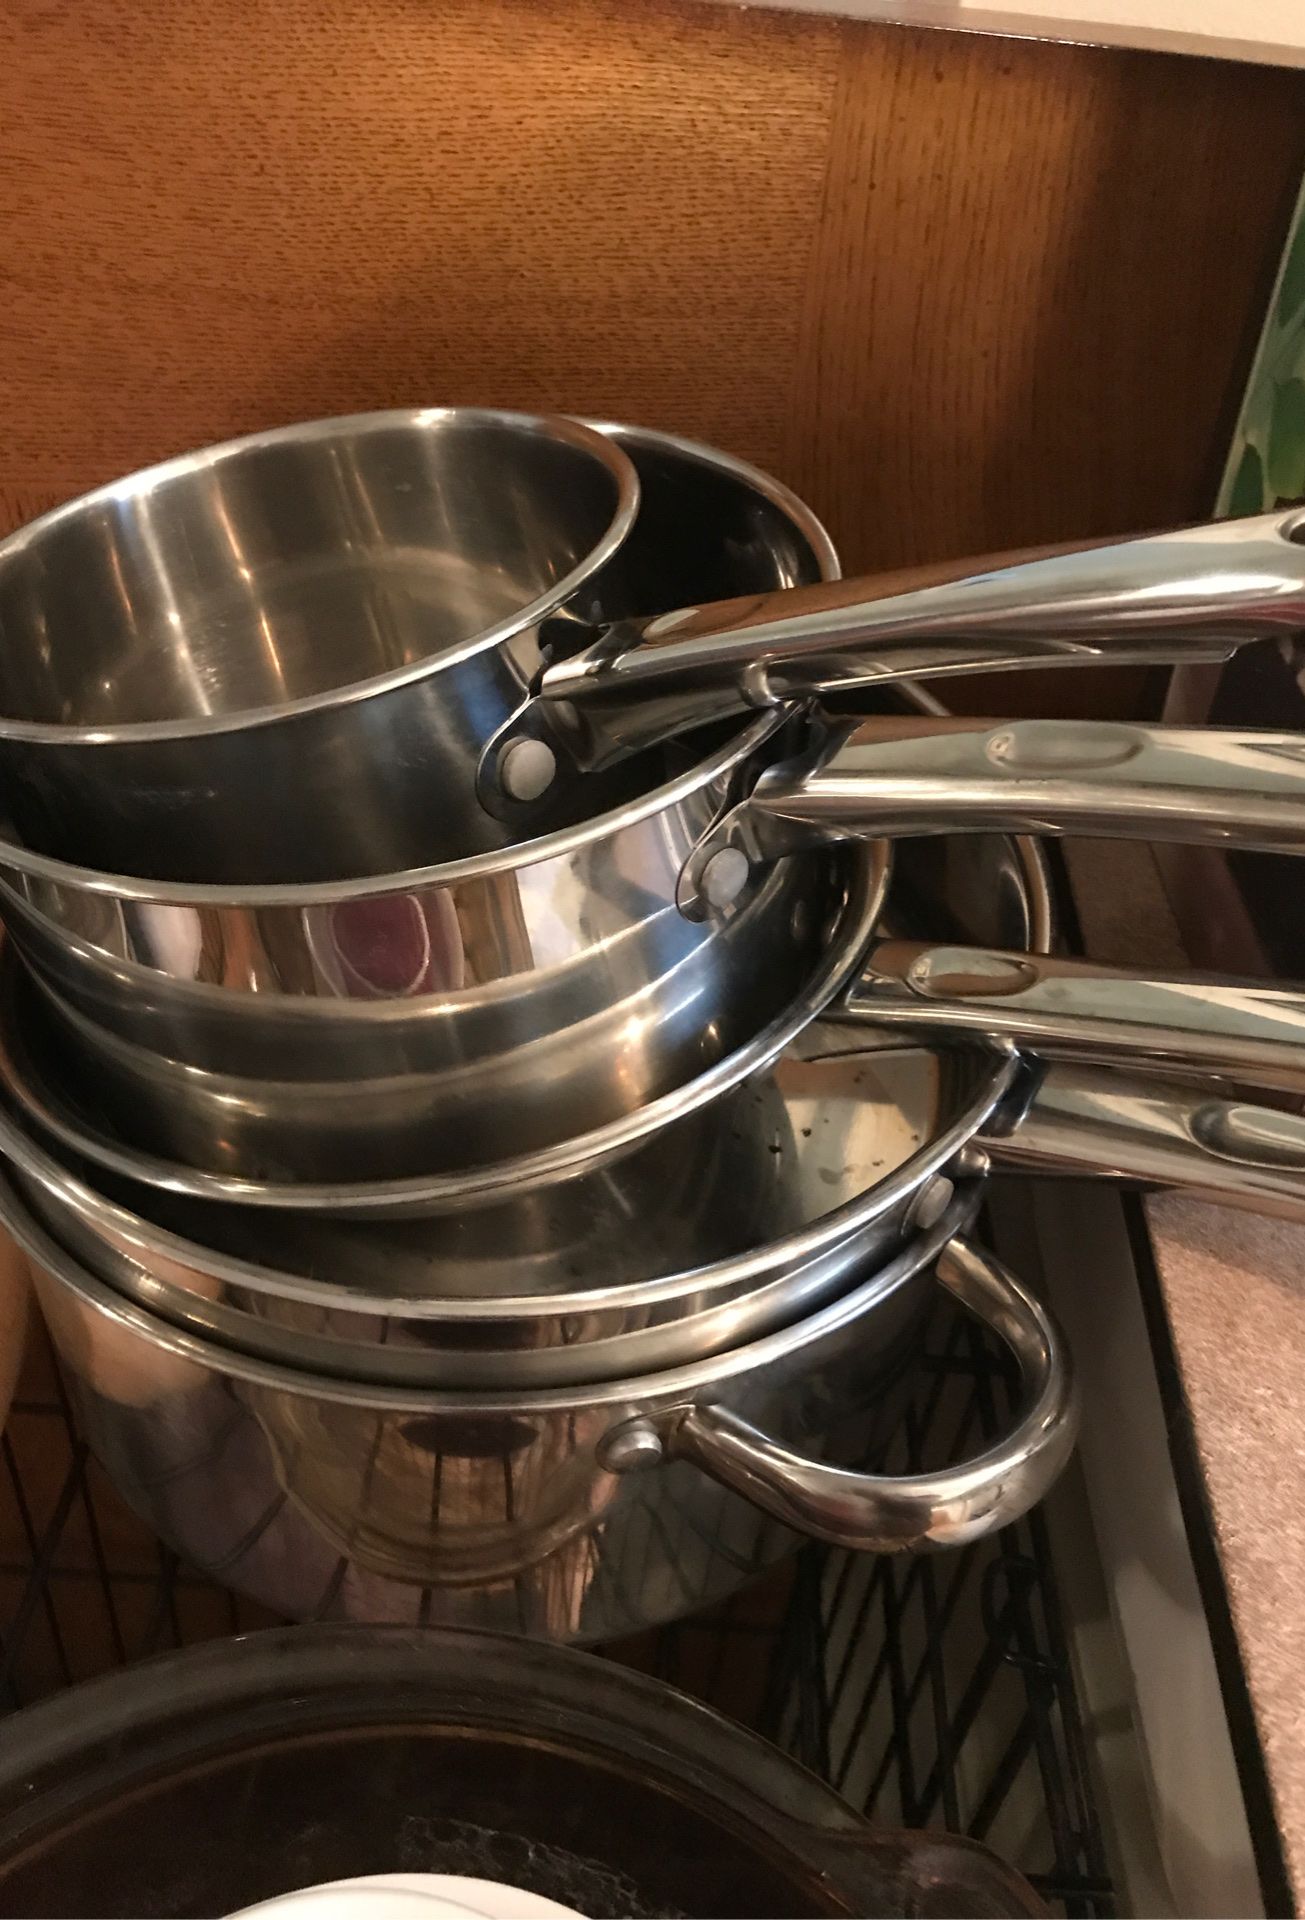 Stainless steel kitchen ware